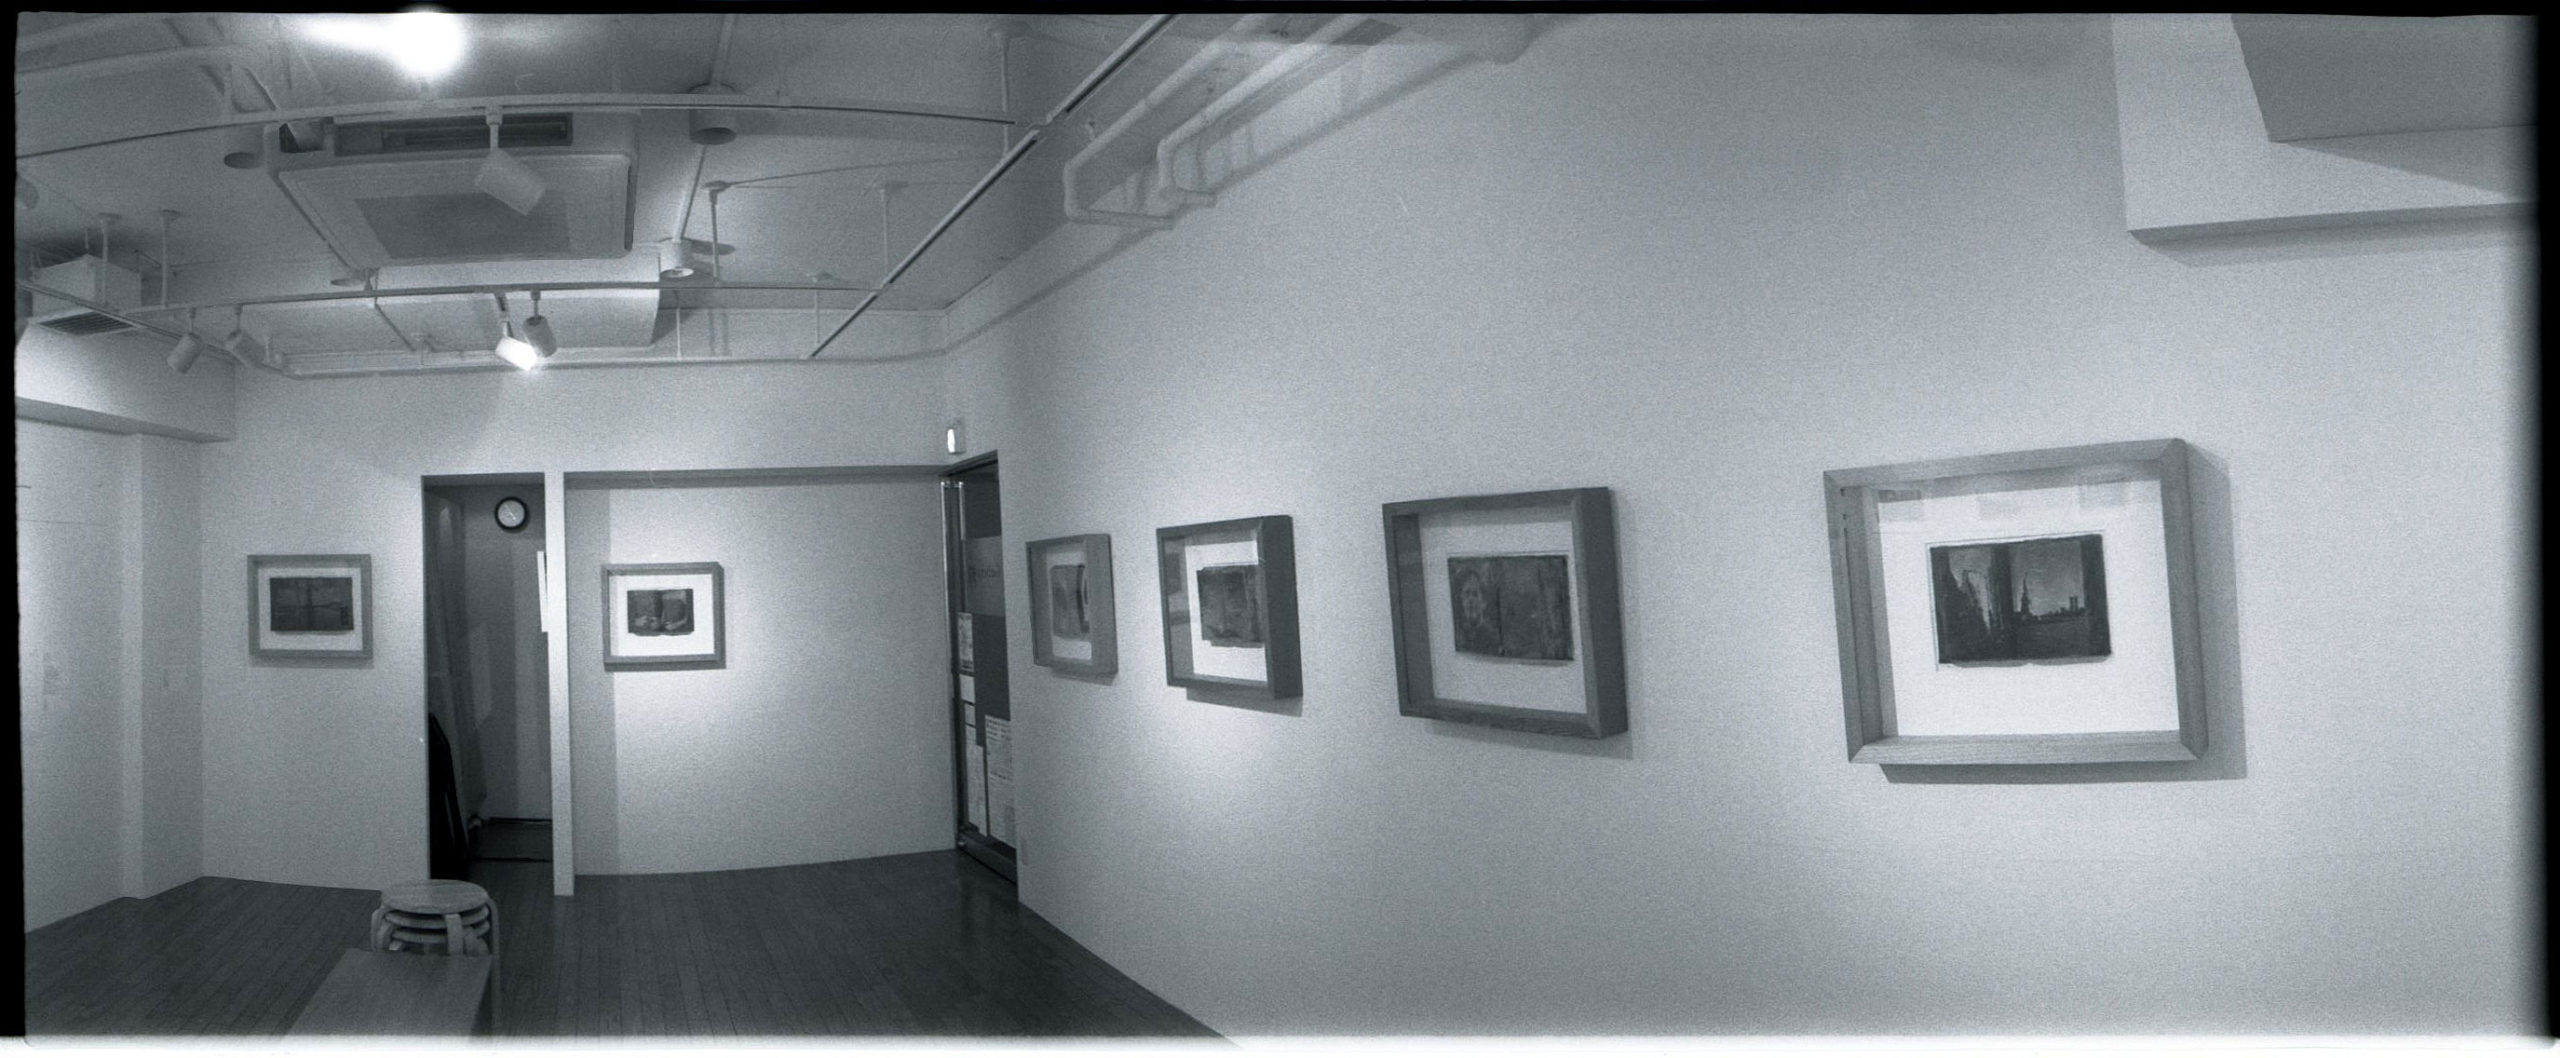 個展会場の展示2 2004年9月 Gallery惺 